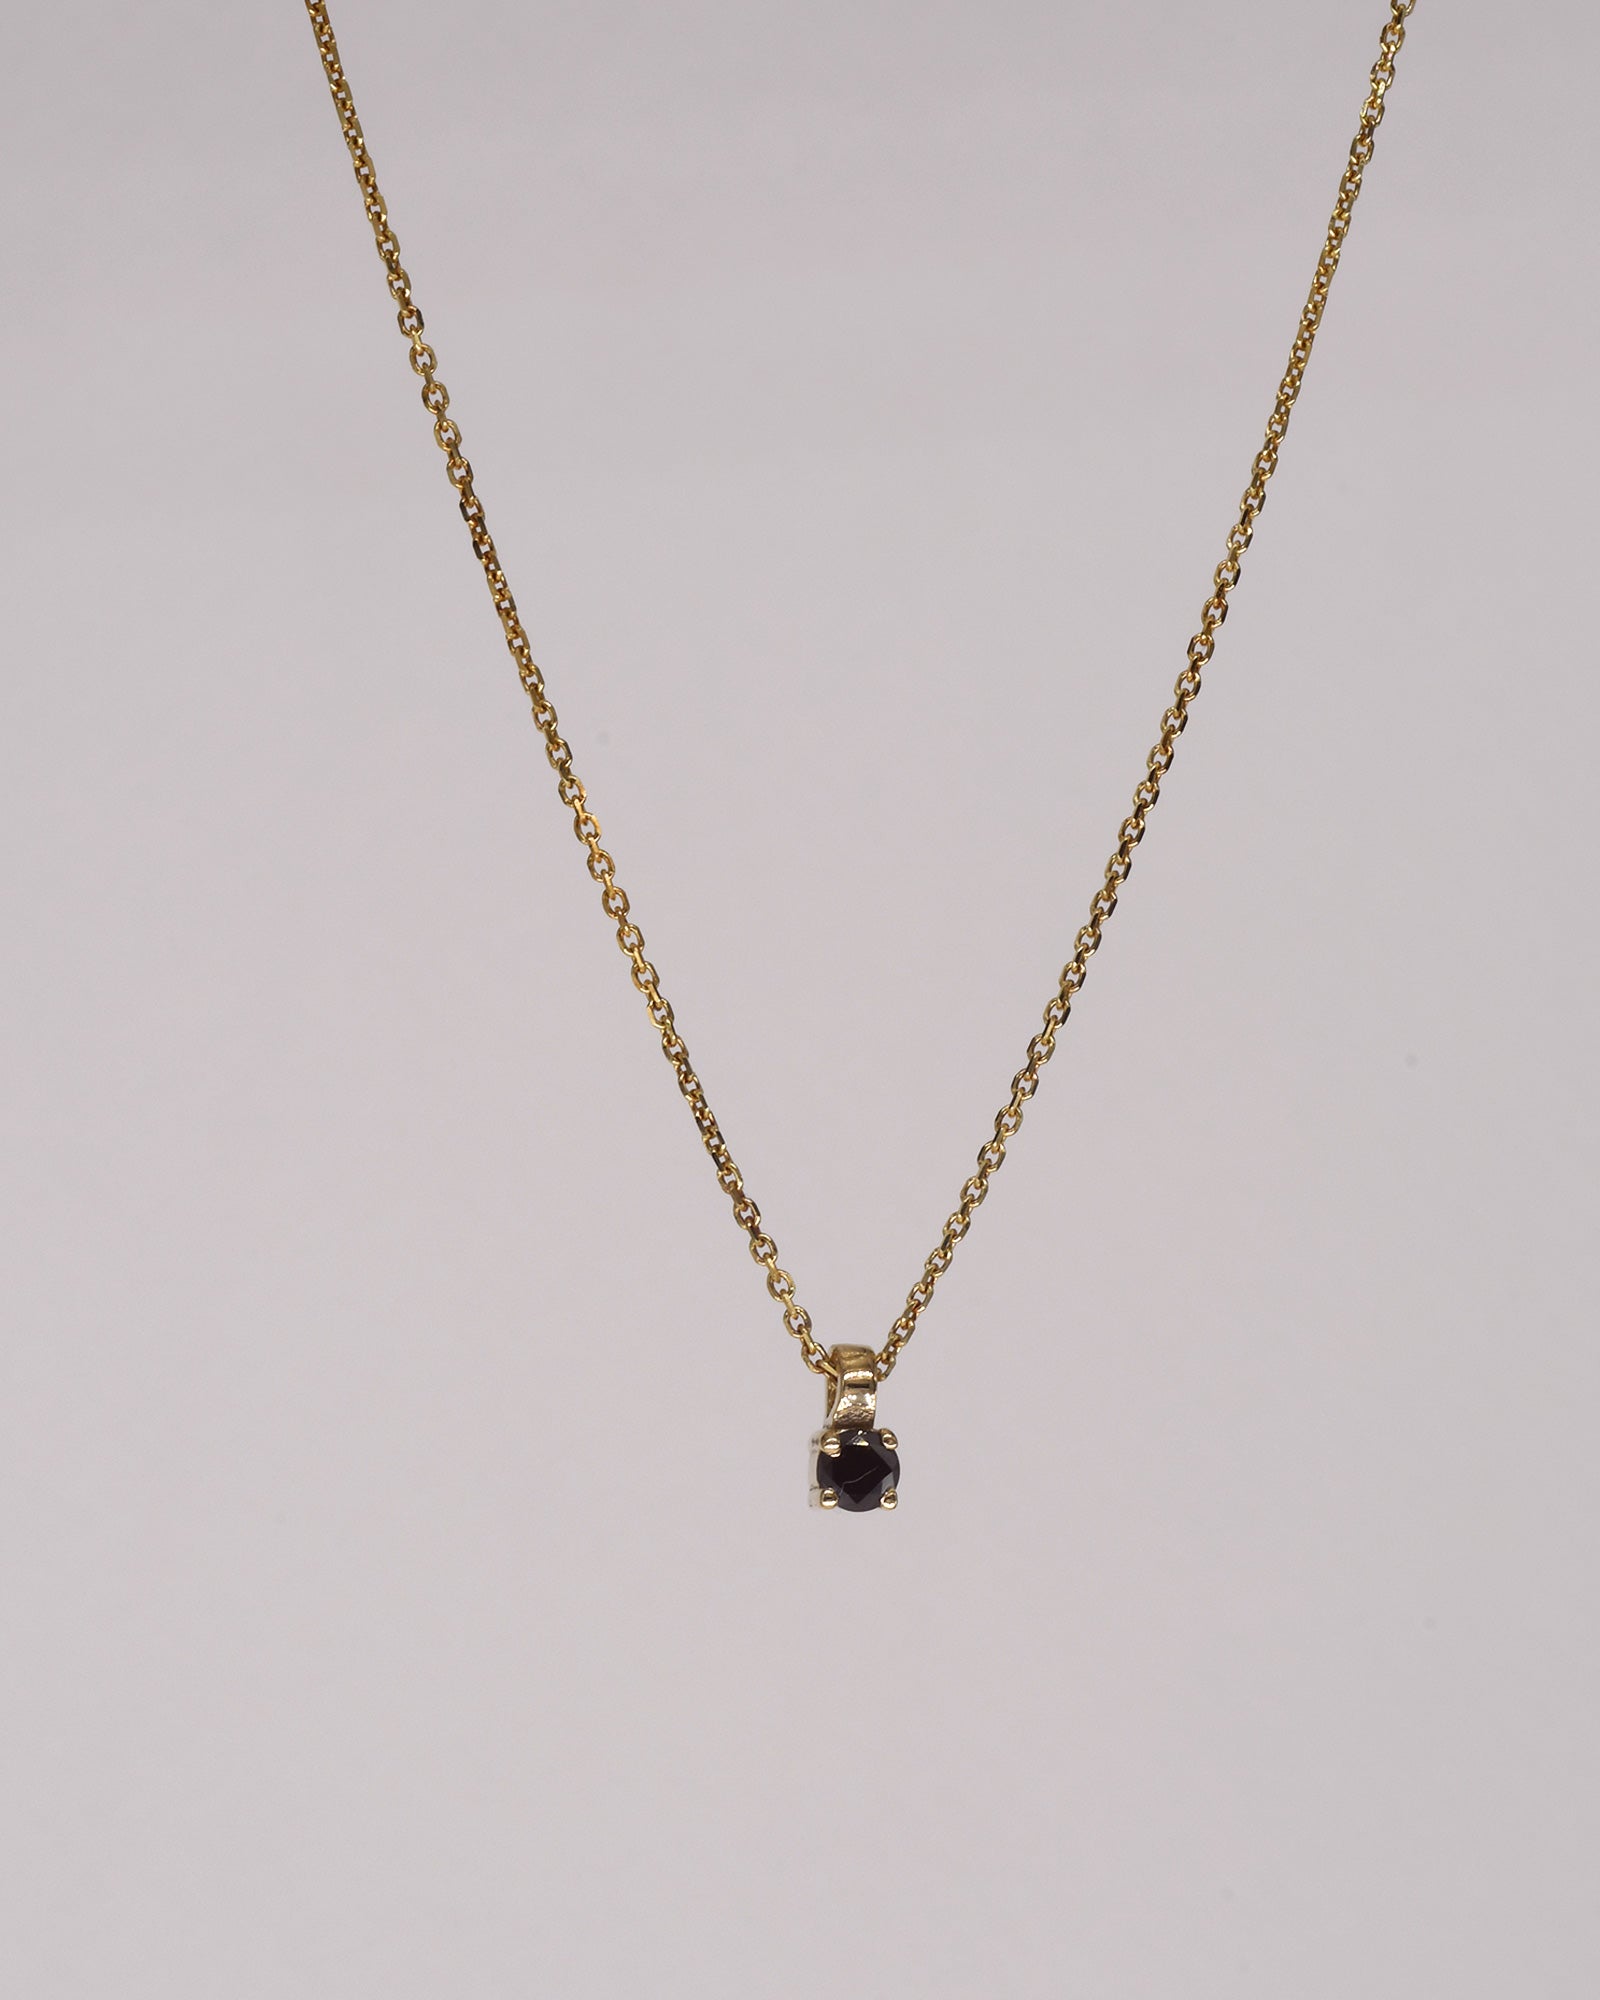 Snow Flake Necklace - Black Diamond